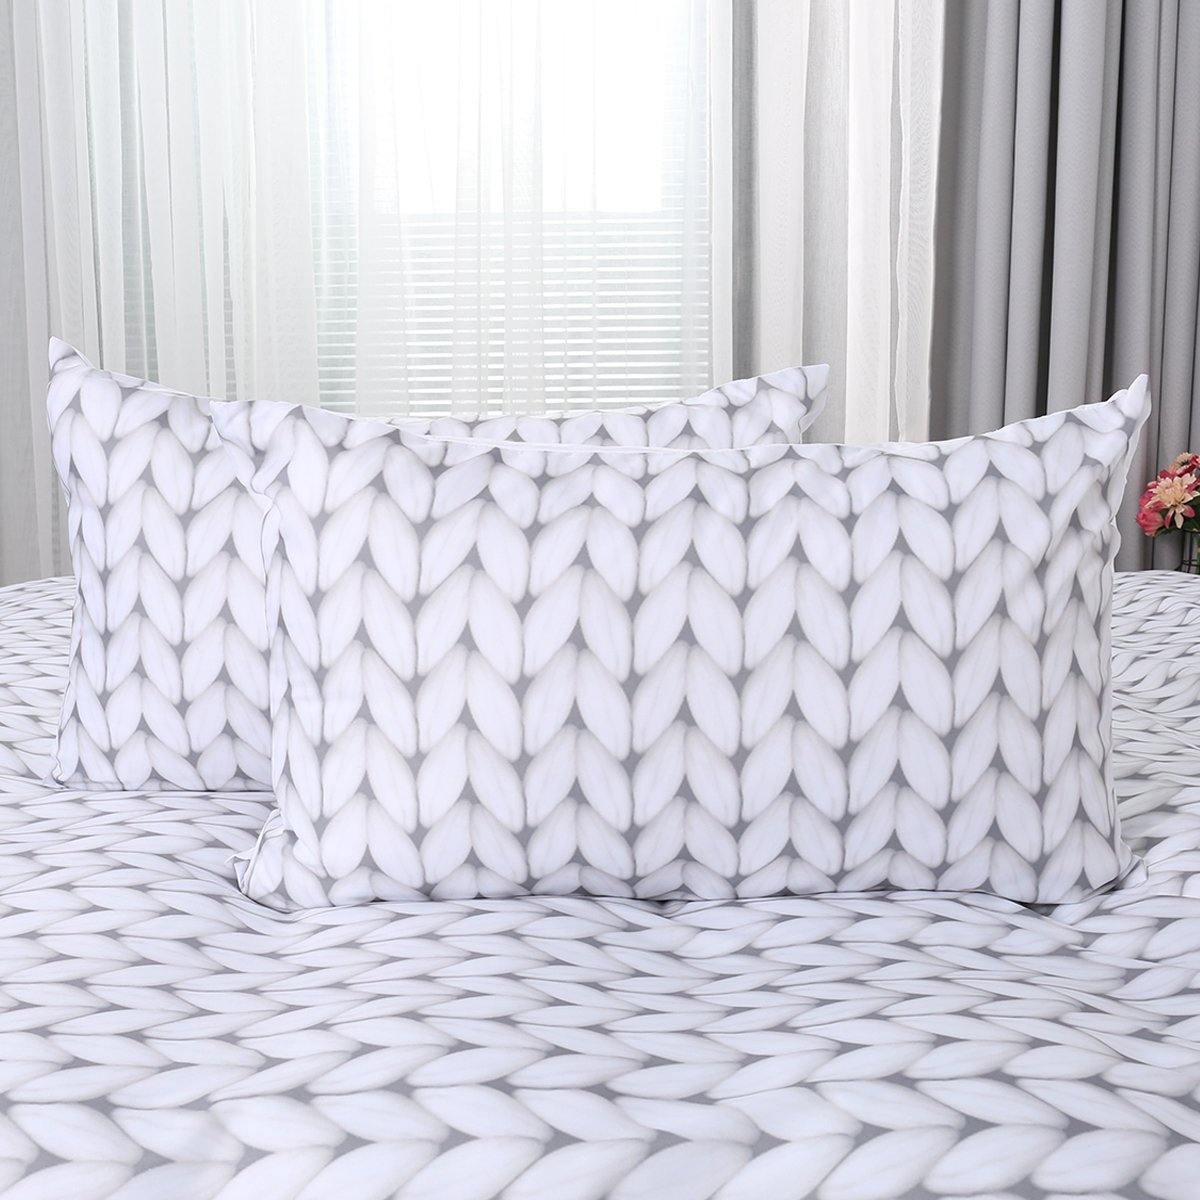 WONGS BEDDING Weave pattern Bedding Bedroom Home Kit - Wongs bedding